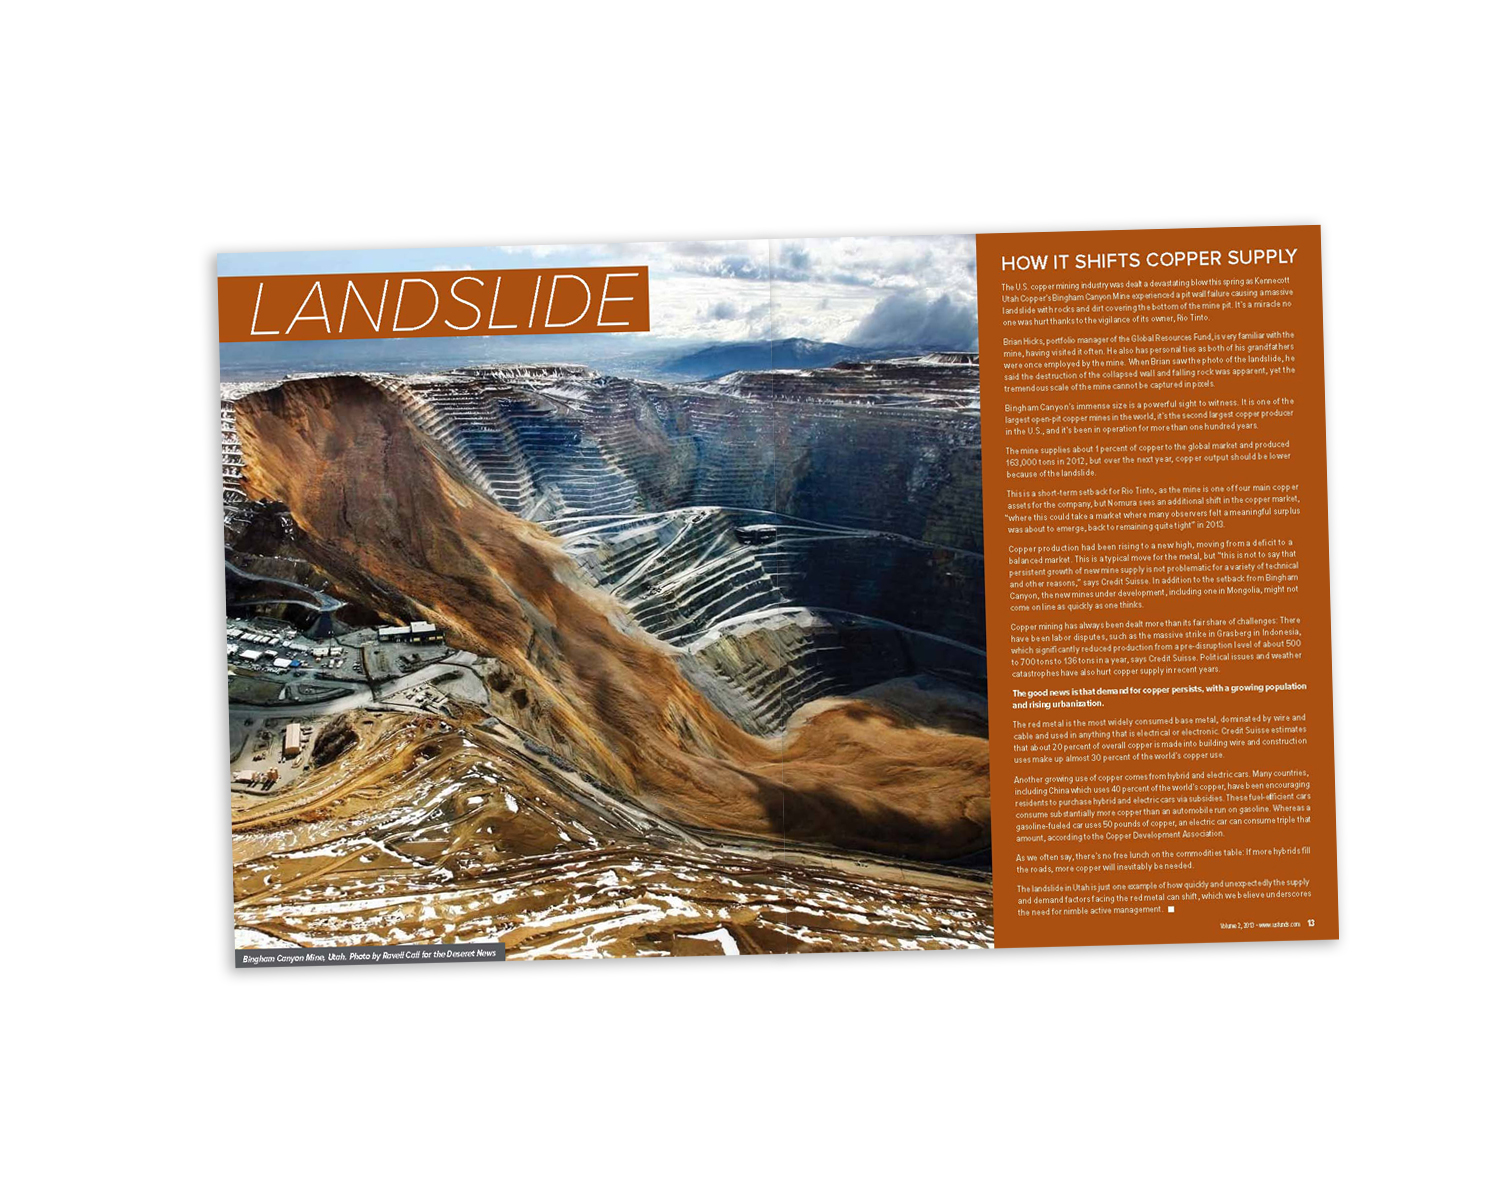 LandslideSpread.jpg